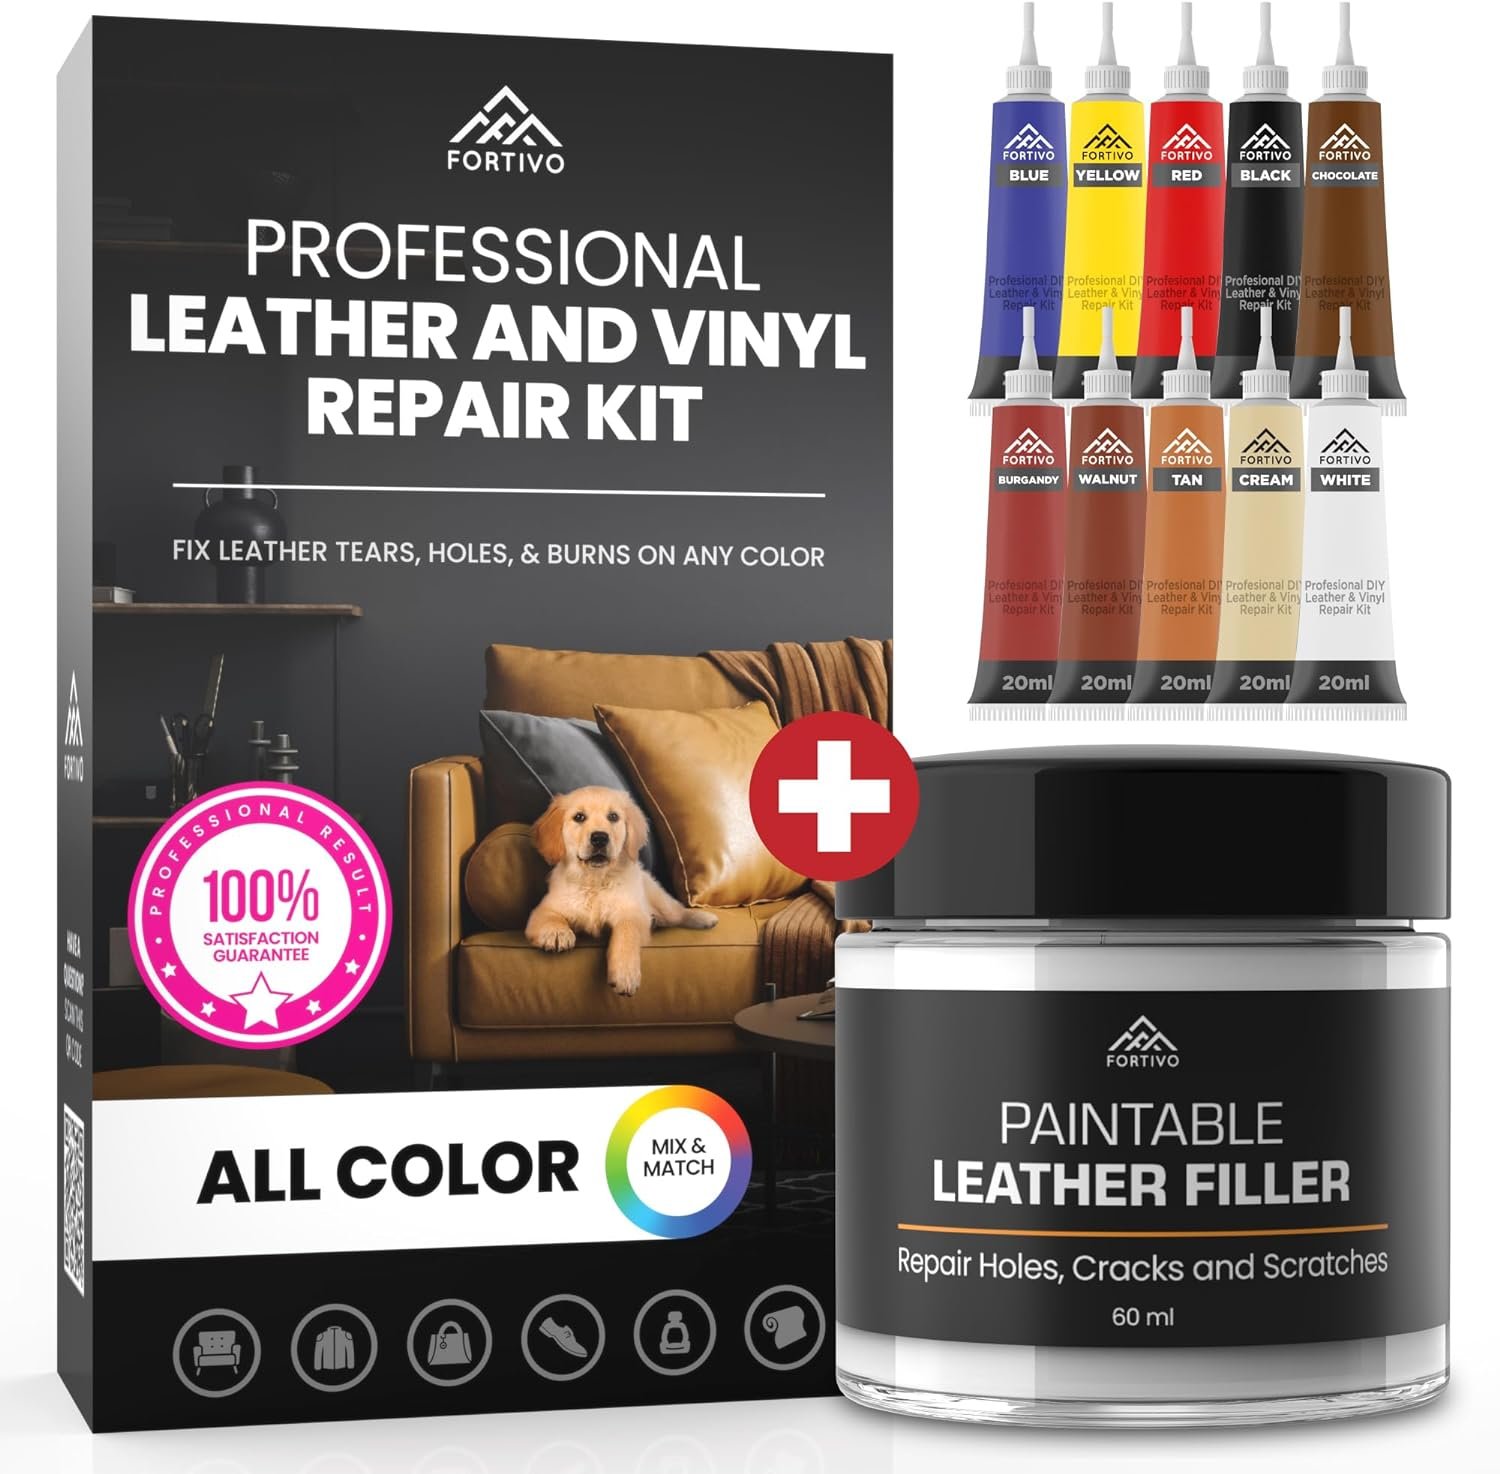 Leather Repair Kit and Filler Bundle Review